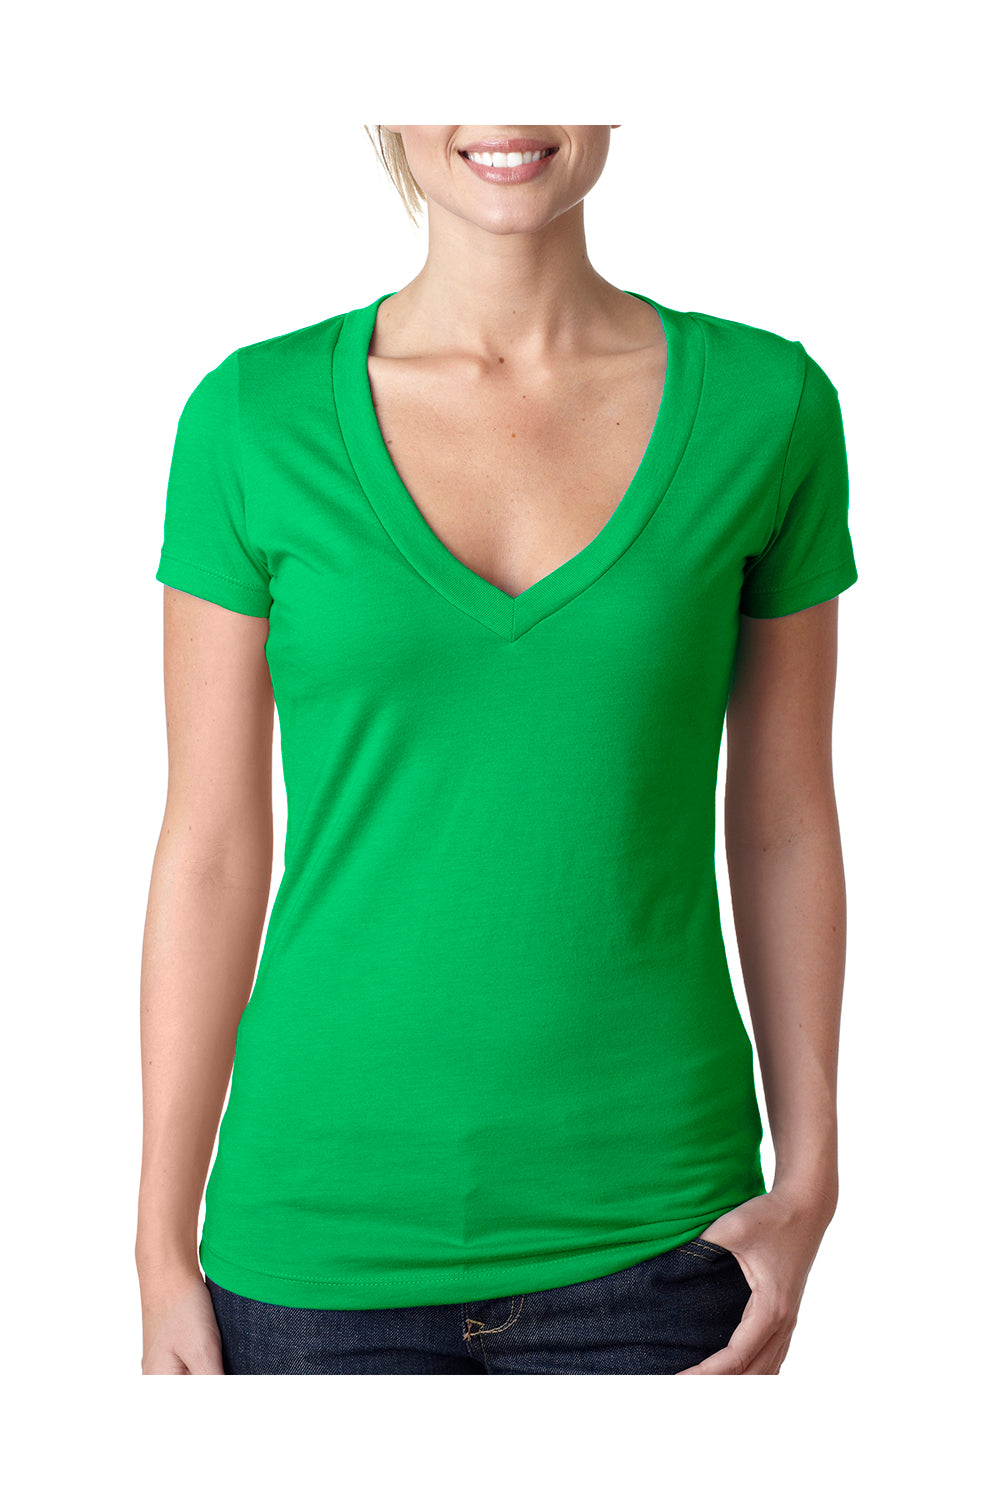 Next Level 6640 Womens CVC Jersey Short Sleeve V-Neck T-Shirt Kelly Green Front